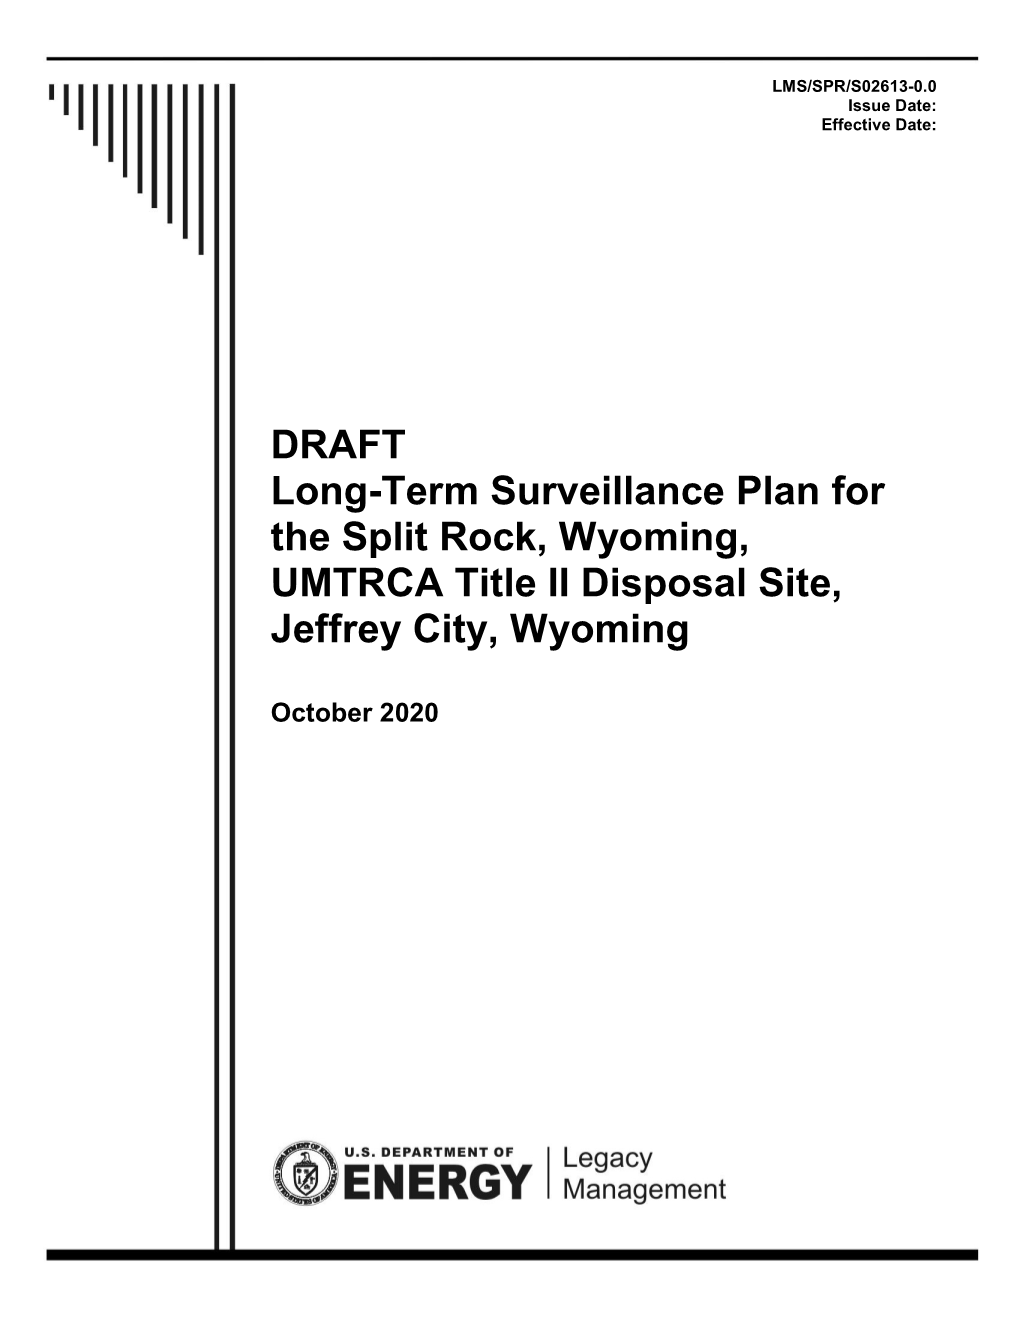 DRAFT Long-Term Surveillance Plan for the Split Rock, Wyoming, UMTRCA Title II Disposal Site, Jeffrey City, Wyoming